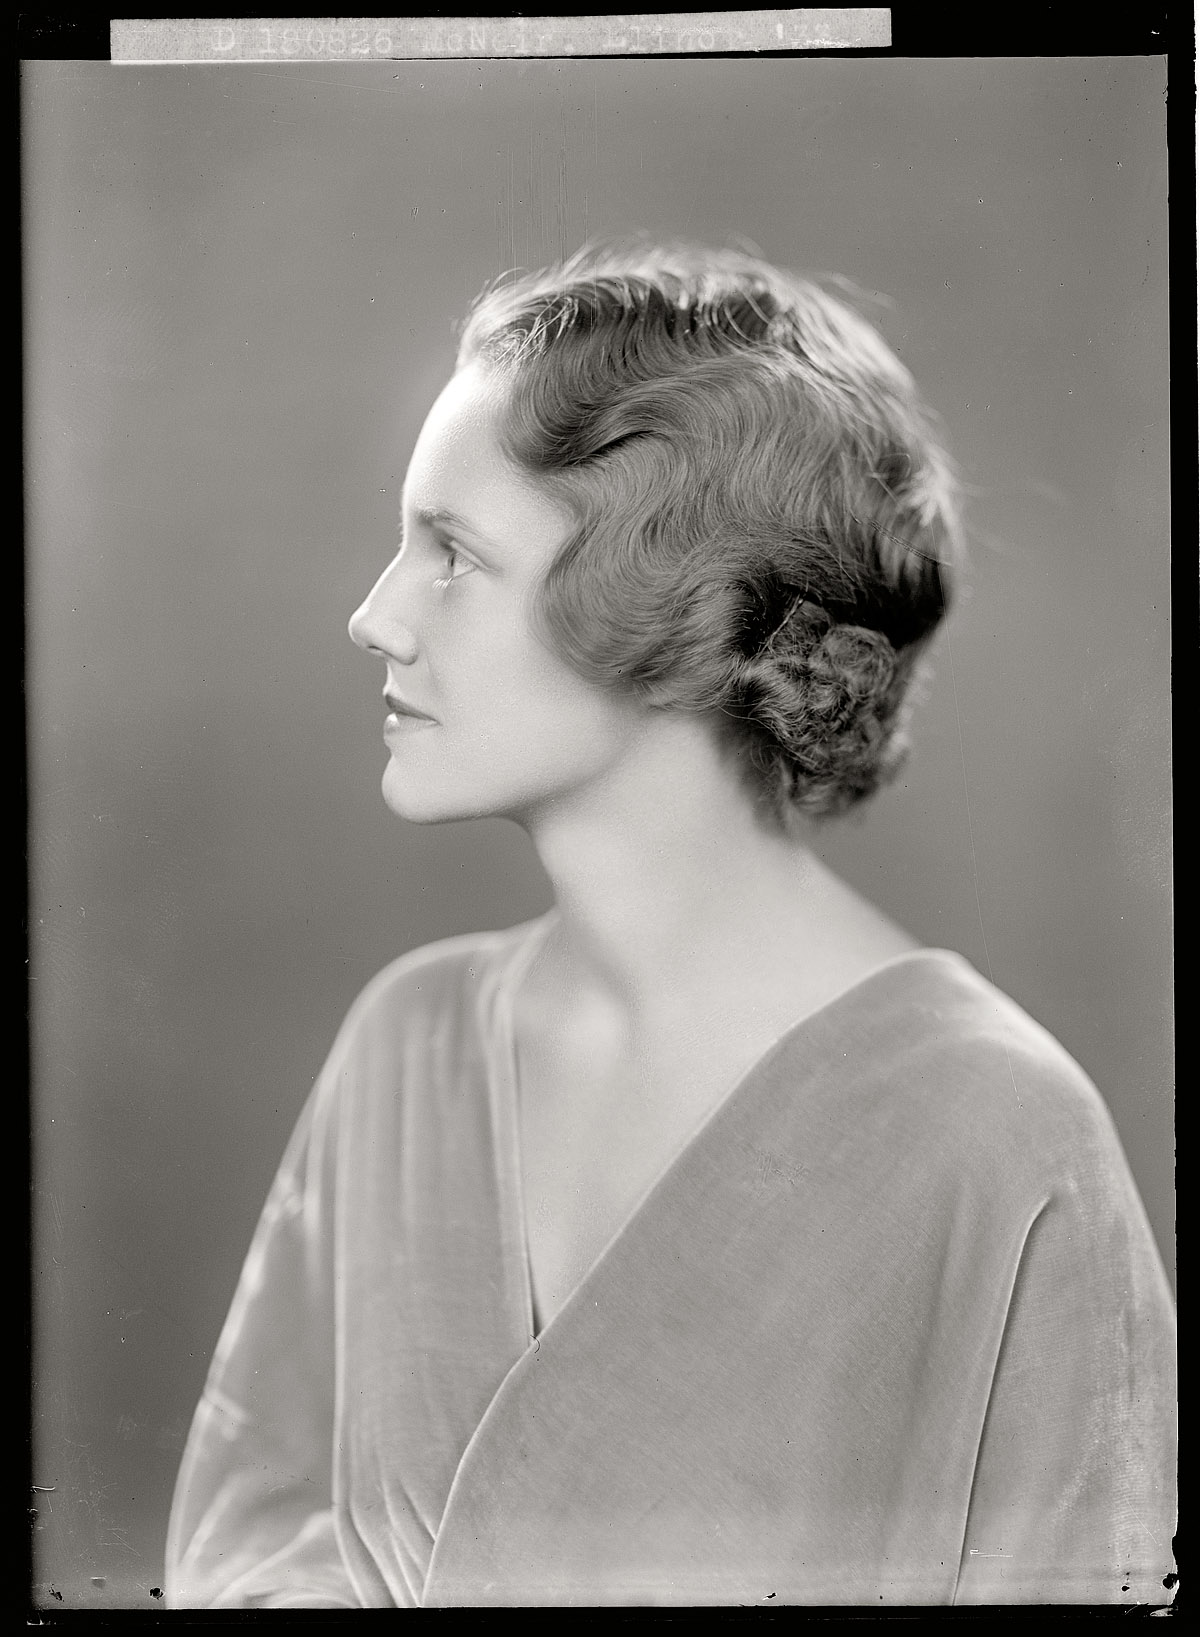 "Miss Elinor McNeir, portrait, 1933." Elinor was a granddaughter of Julius Burrows (1837-1915), senator from Michigan. Harris & Ewing. View full size.